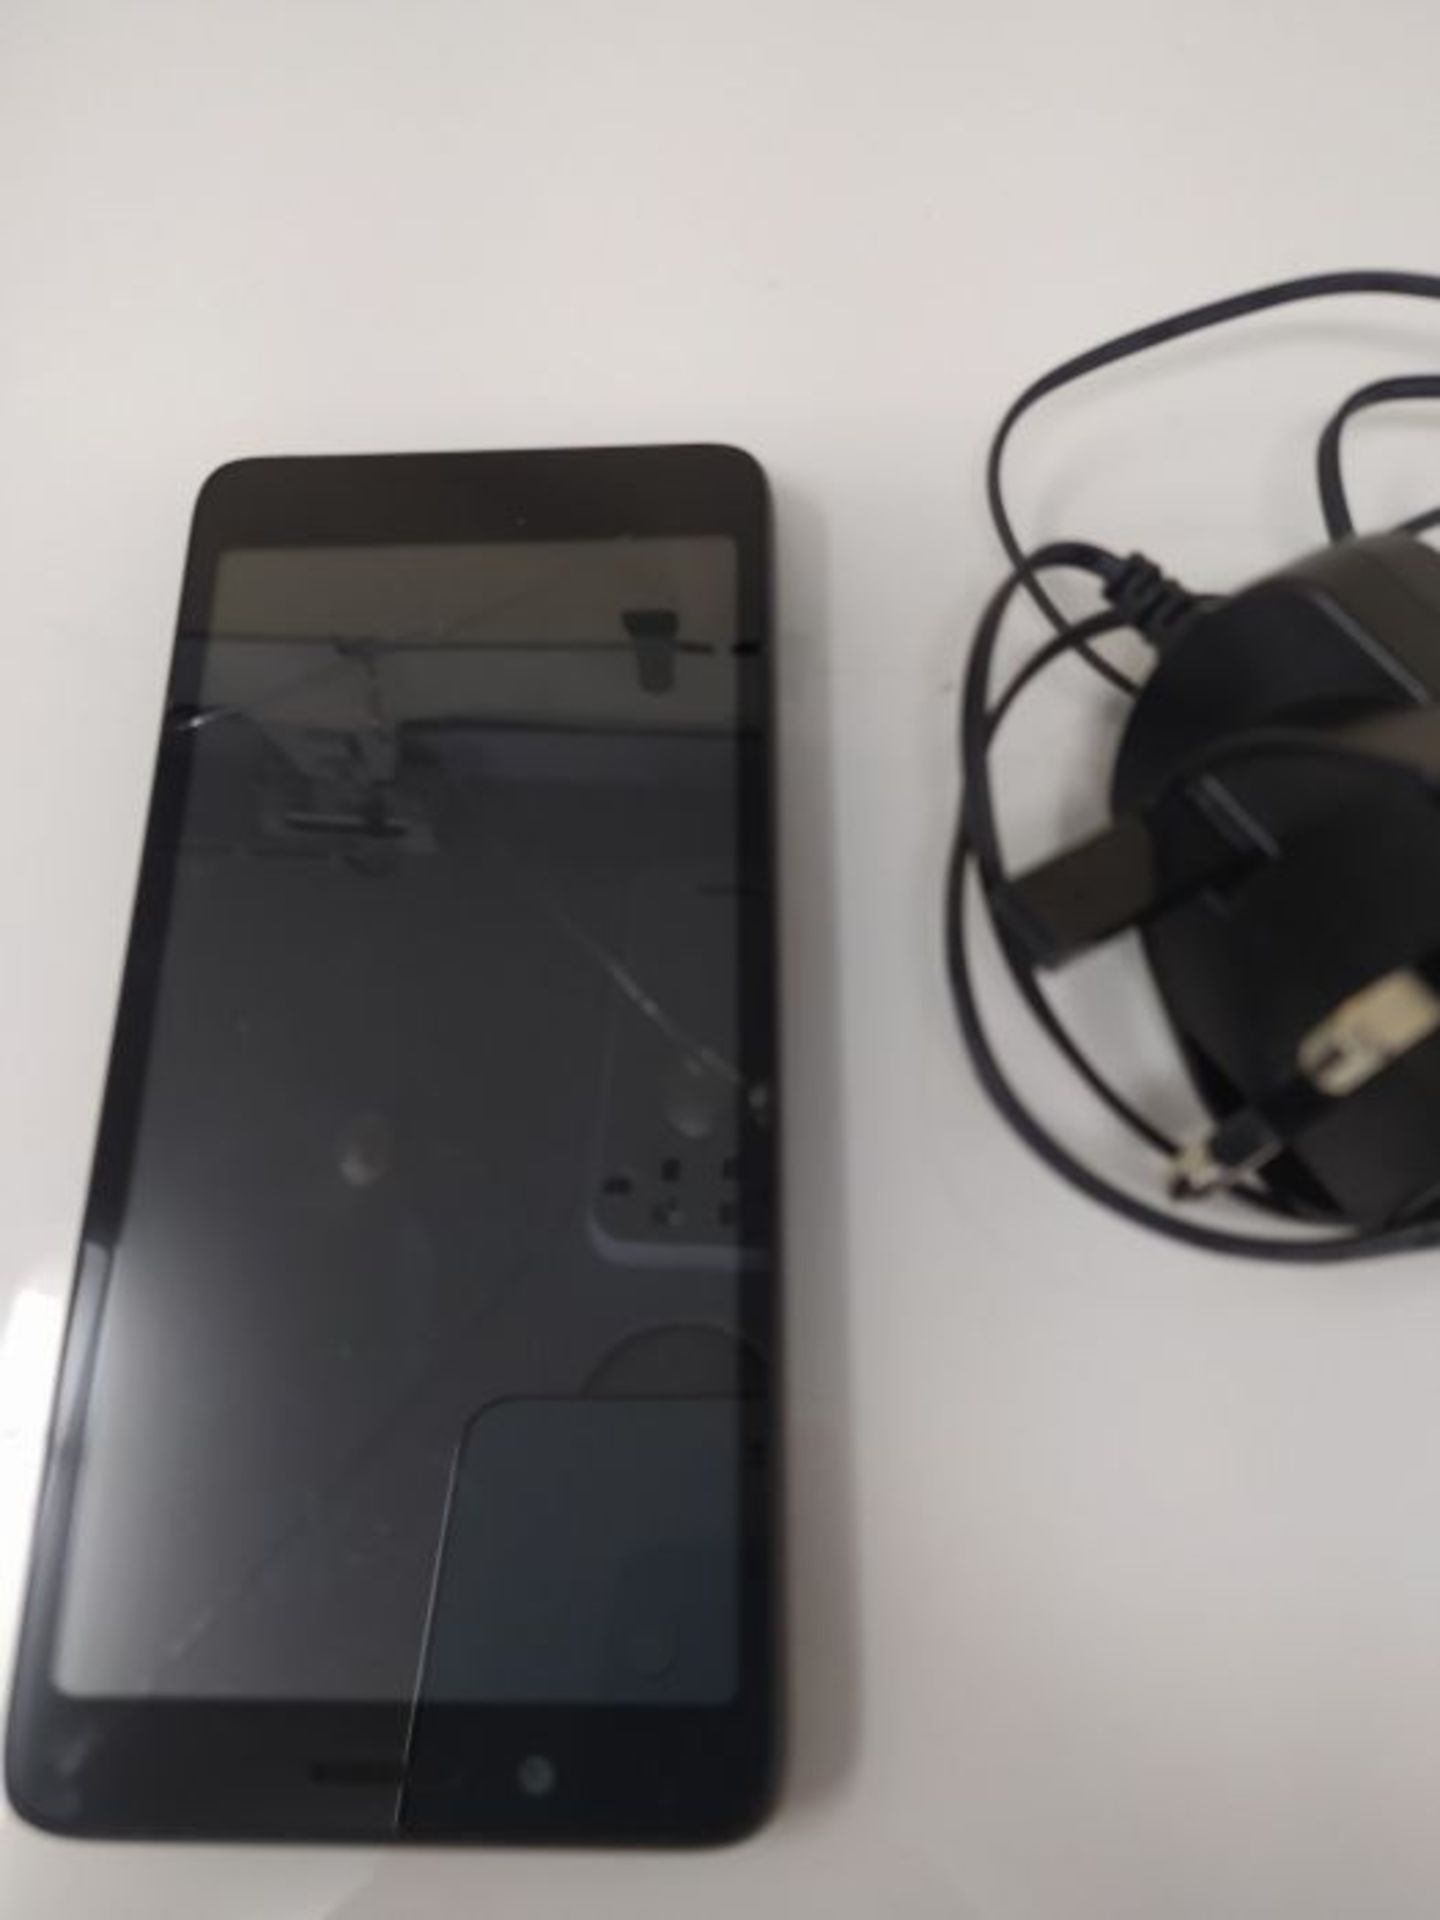 Alcatel 1C 2019 Sim Free Unlocked UK Smartphone 18:9 Display 8GB Dual Sim- Black - Image 2 of 3